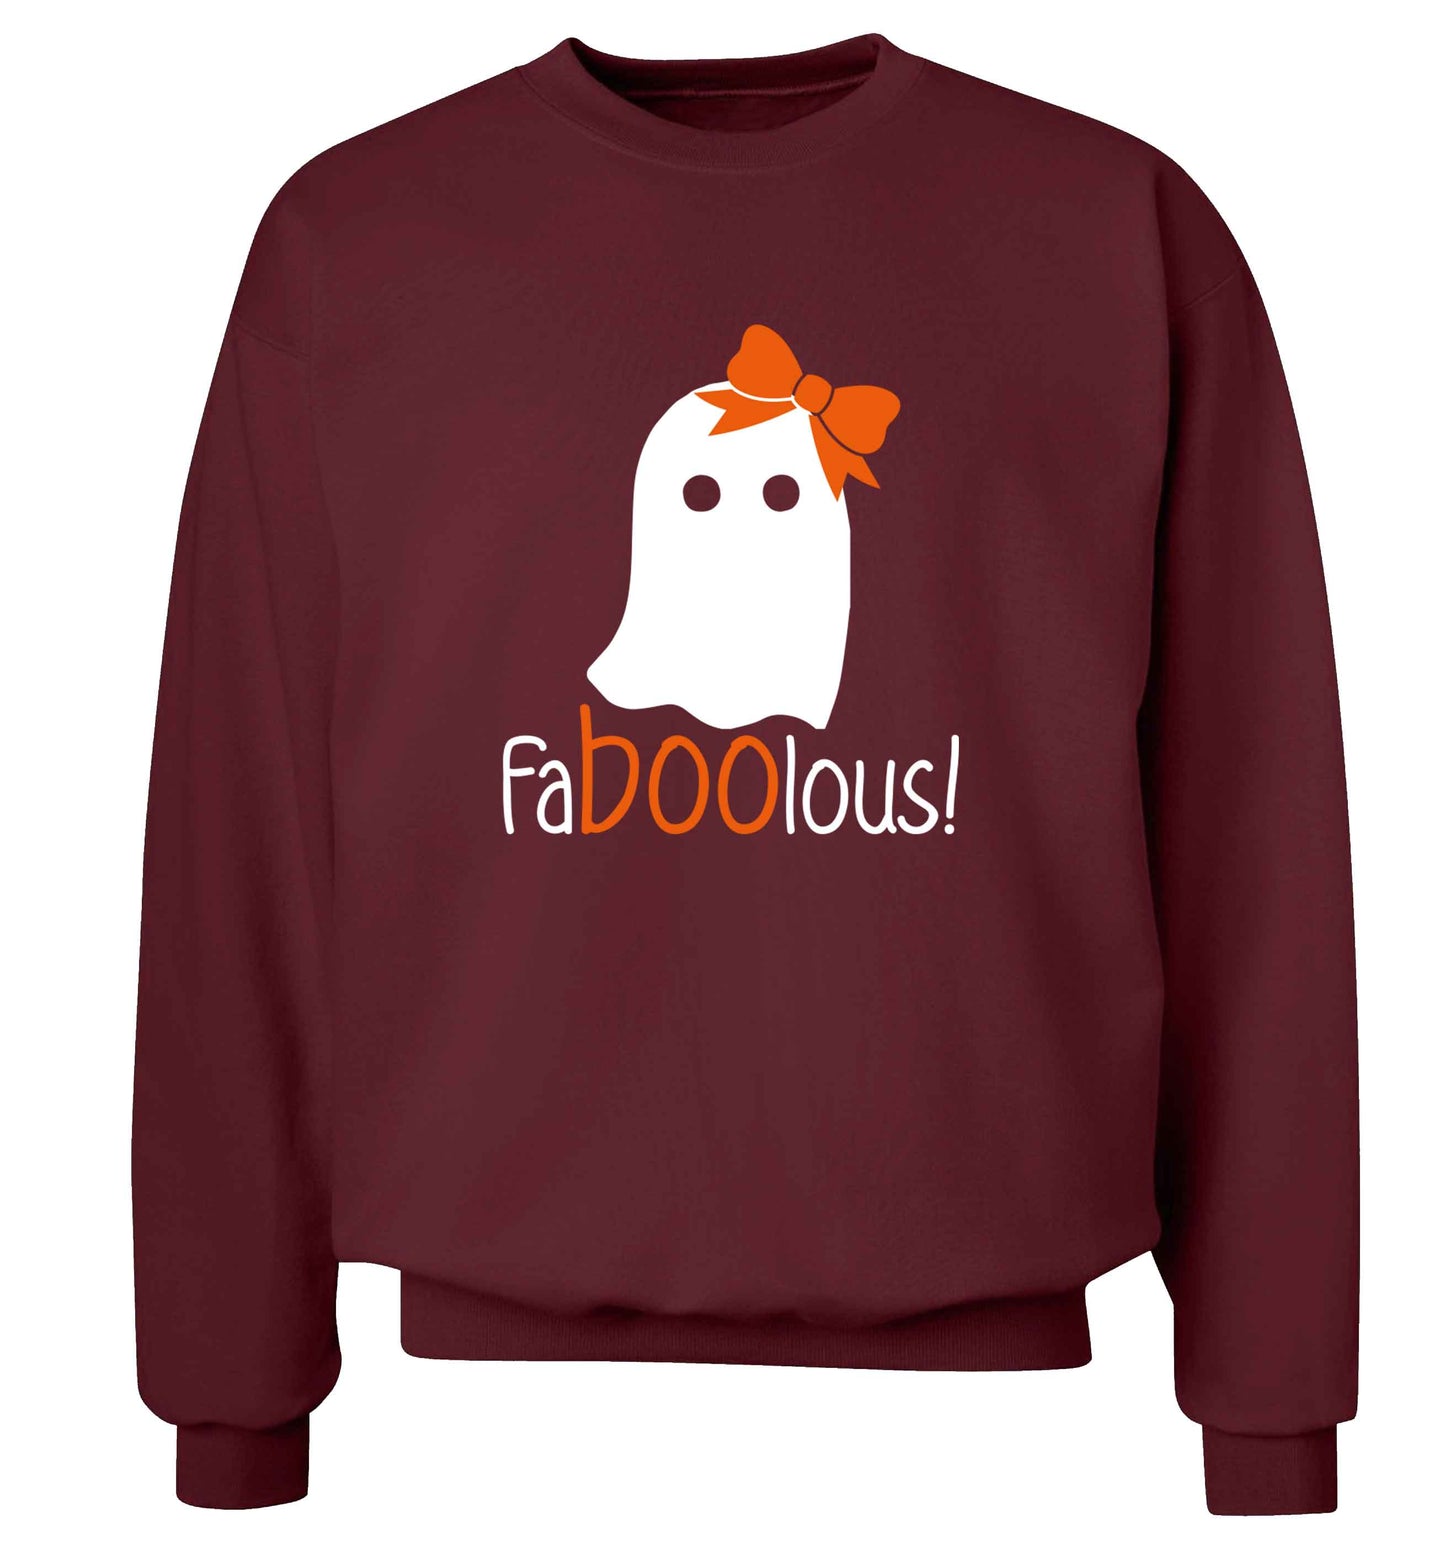 Faboolous ghost adult's unisex maroon sweater 2XL